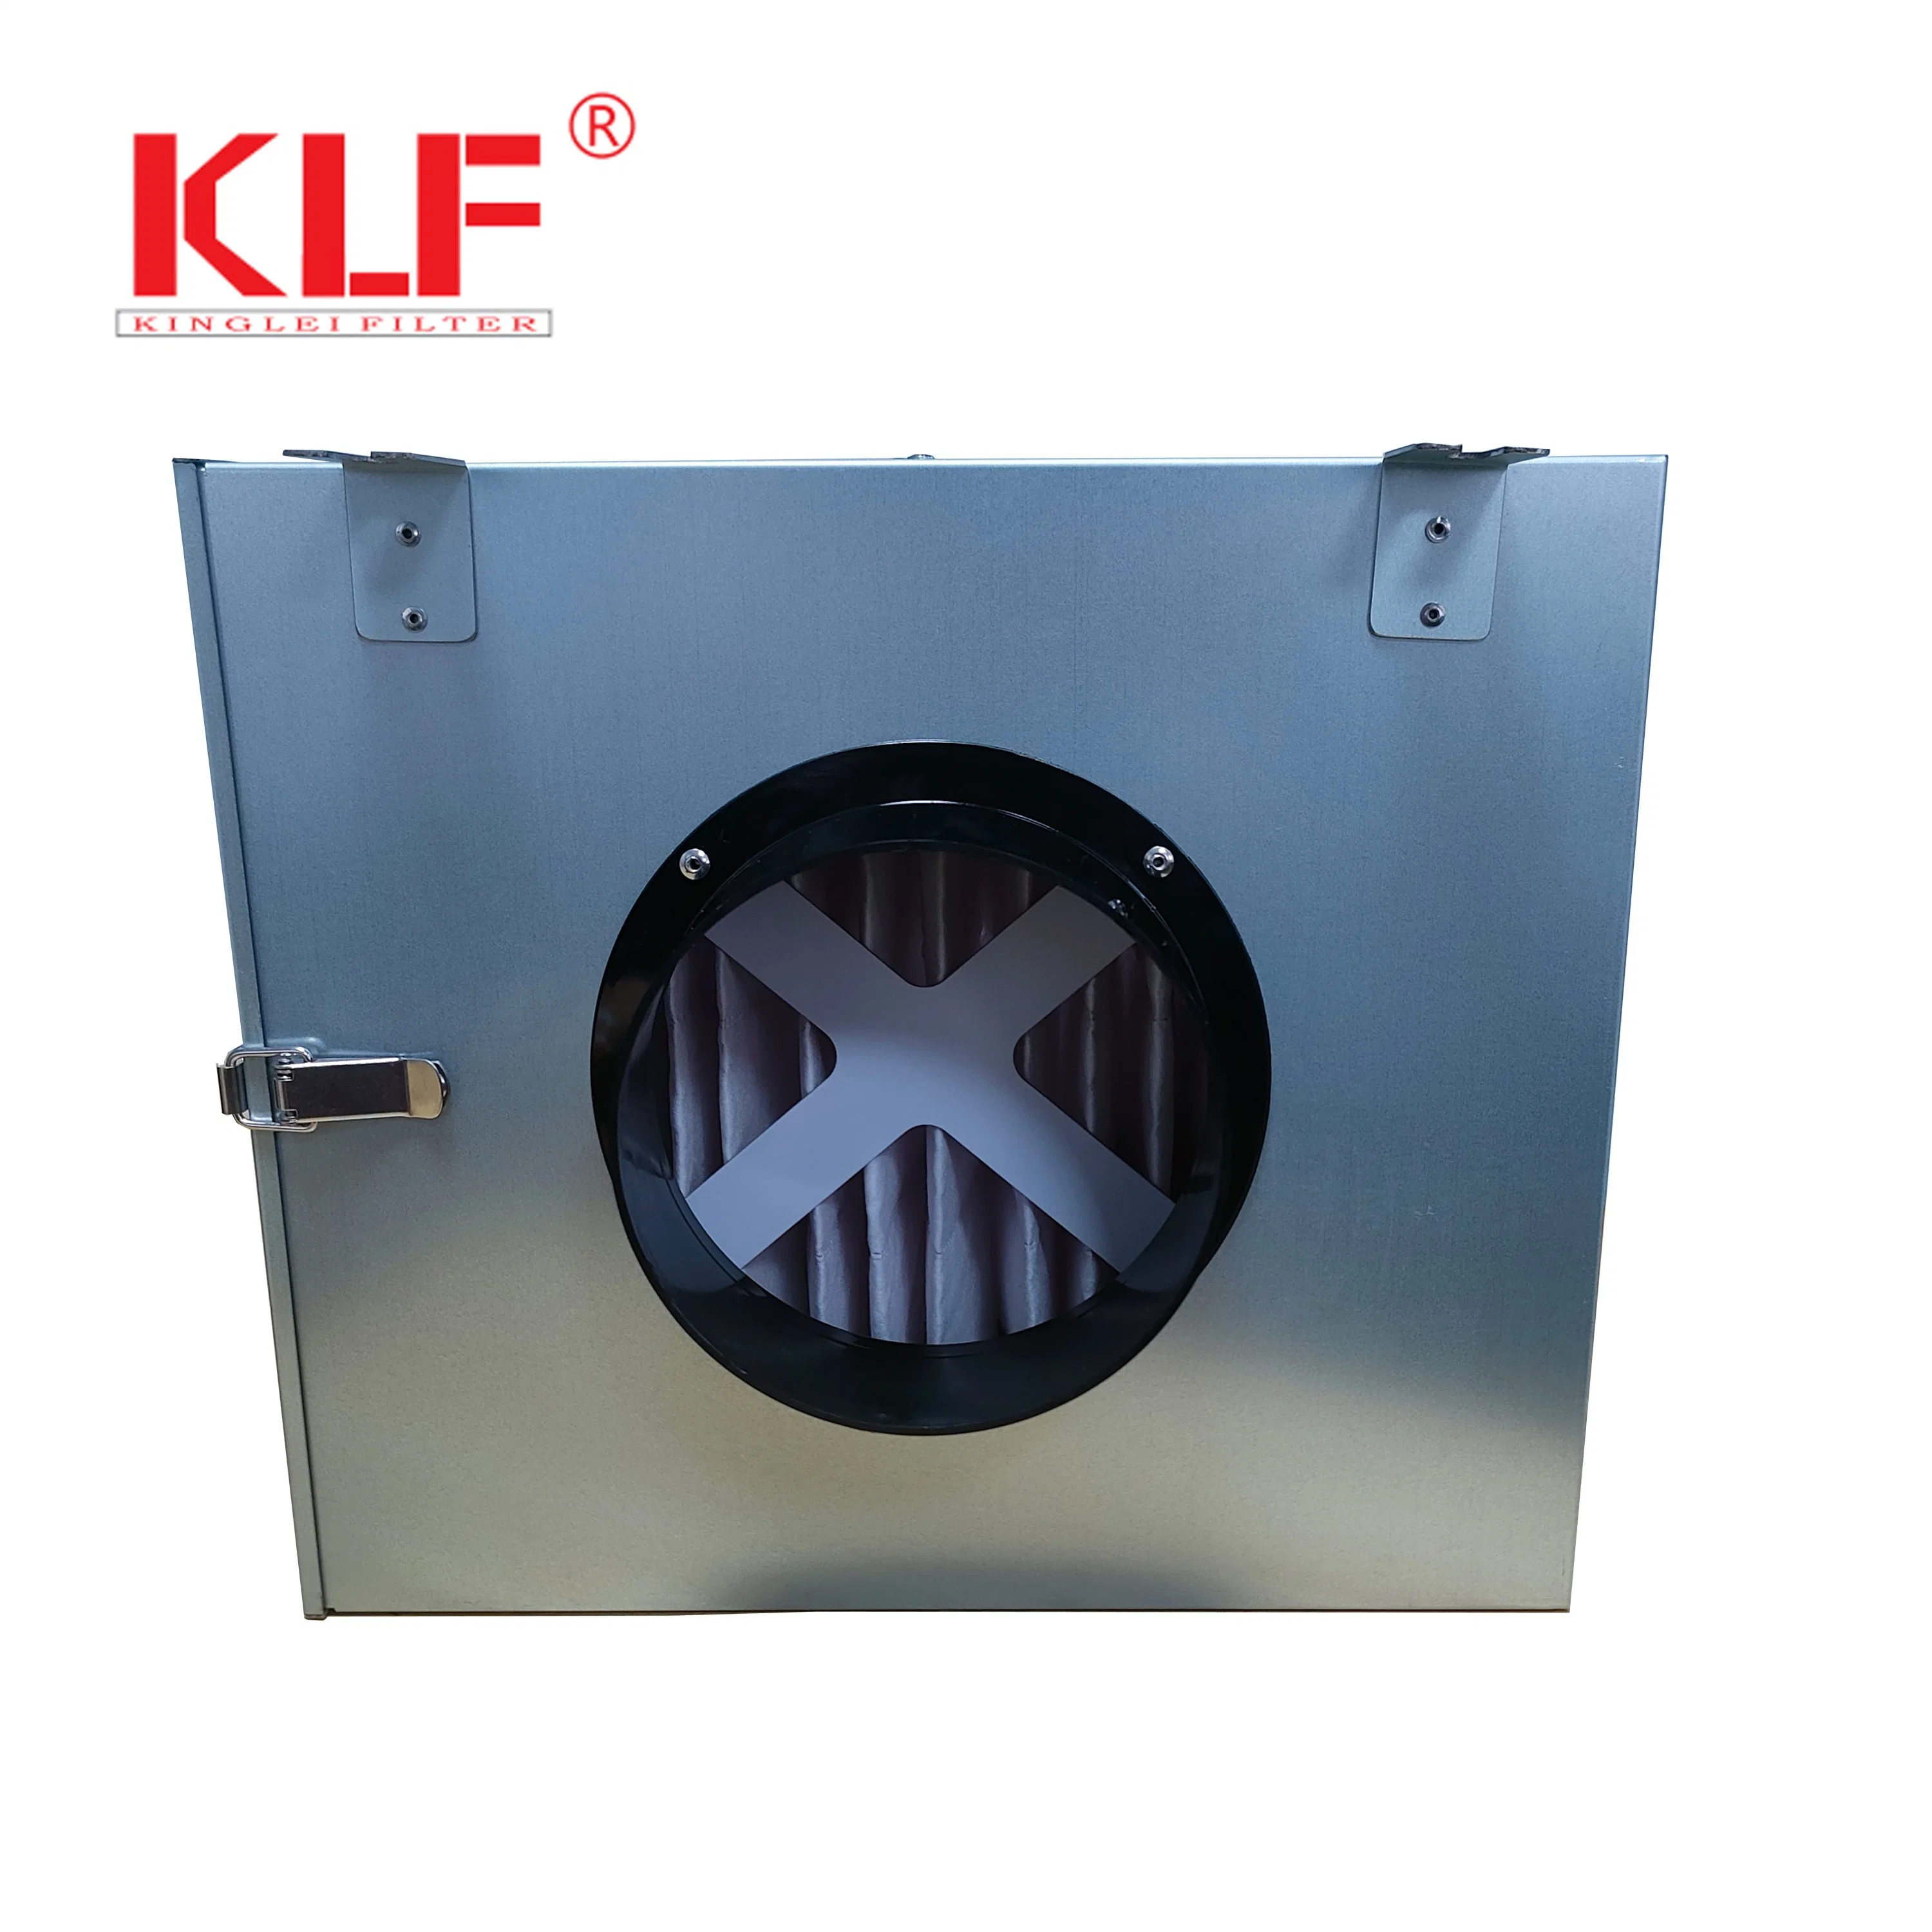 Caixa do filtro de ar com filtro HEPA e filtro de carbono activado Para sistema HVAC